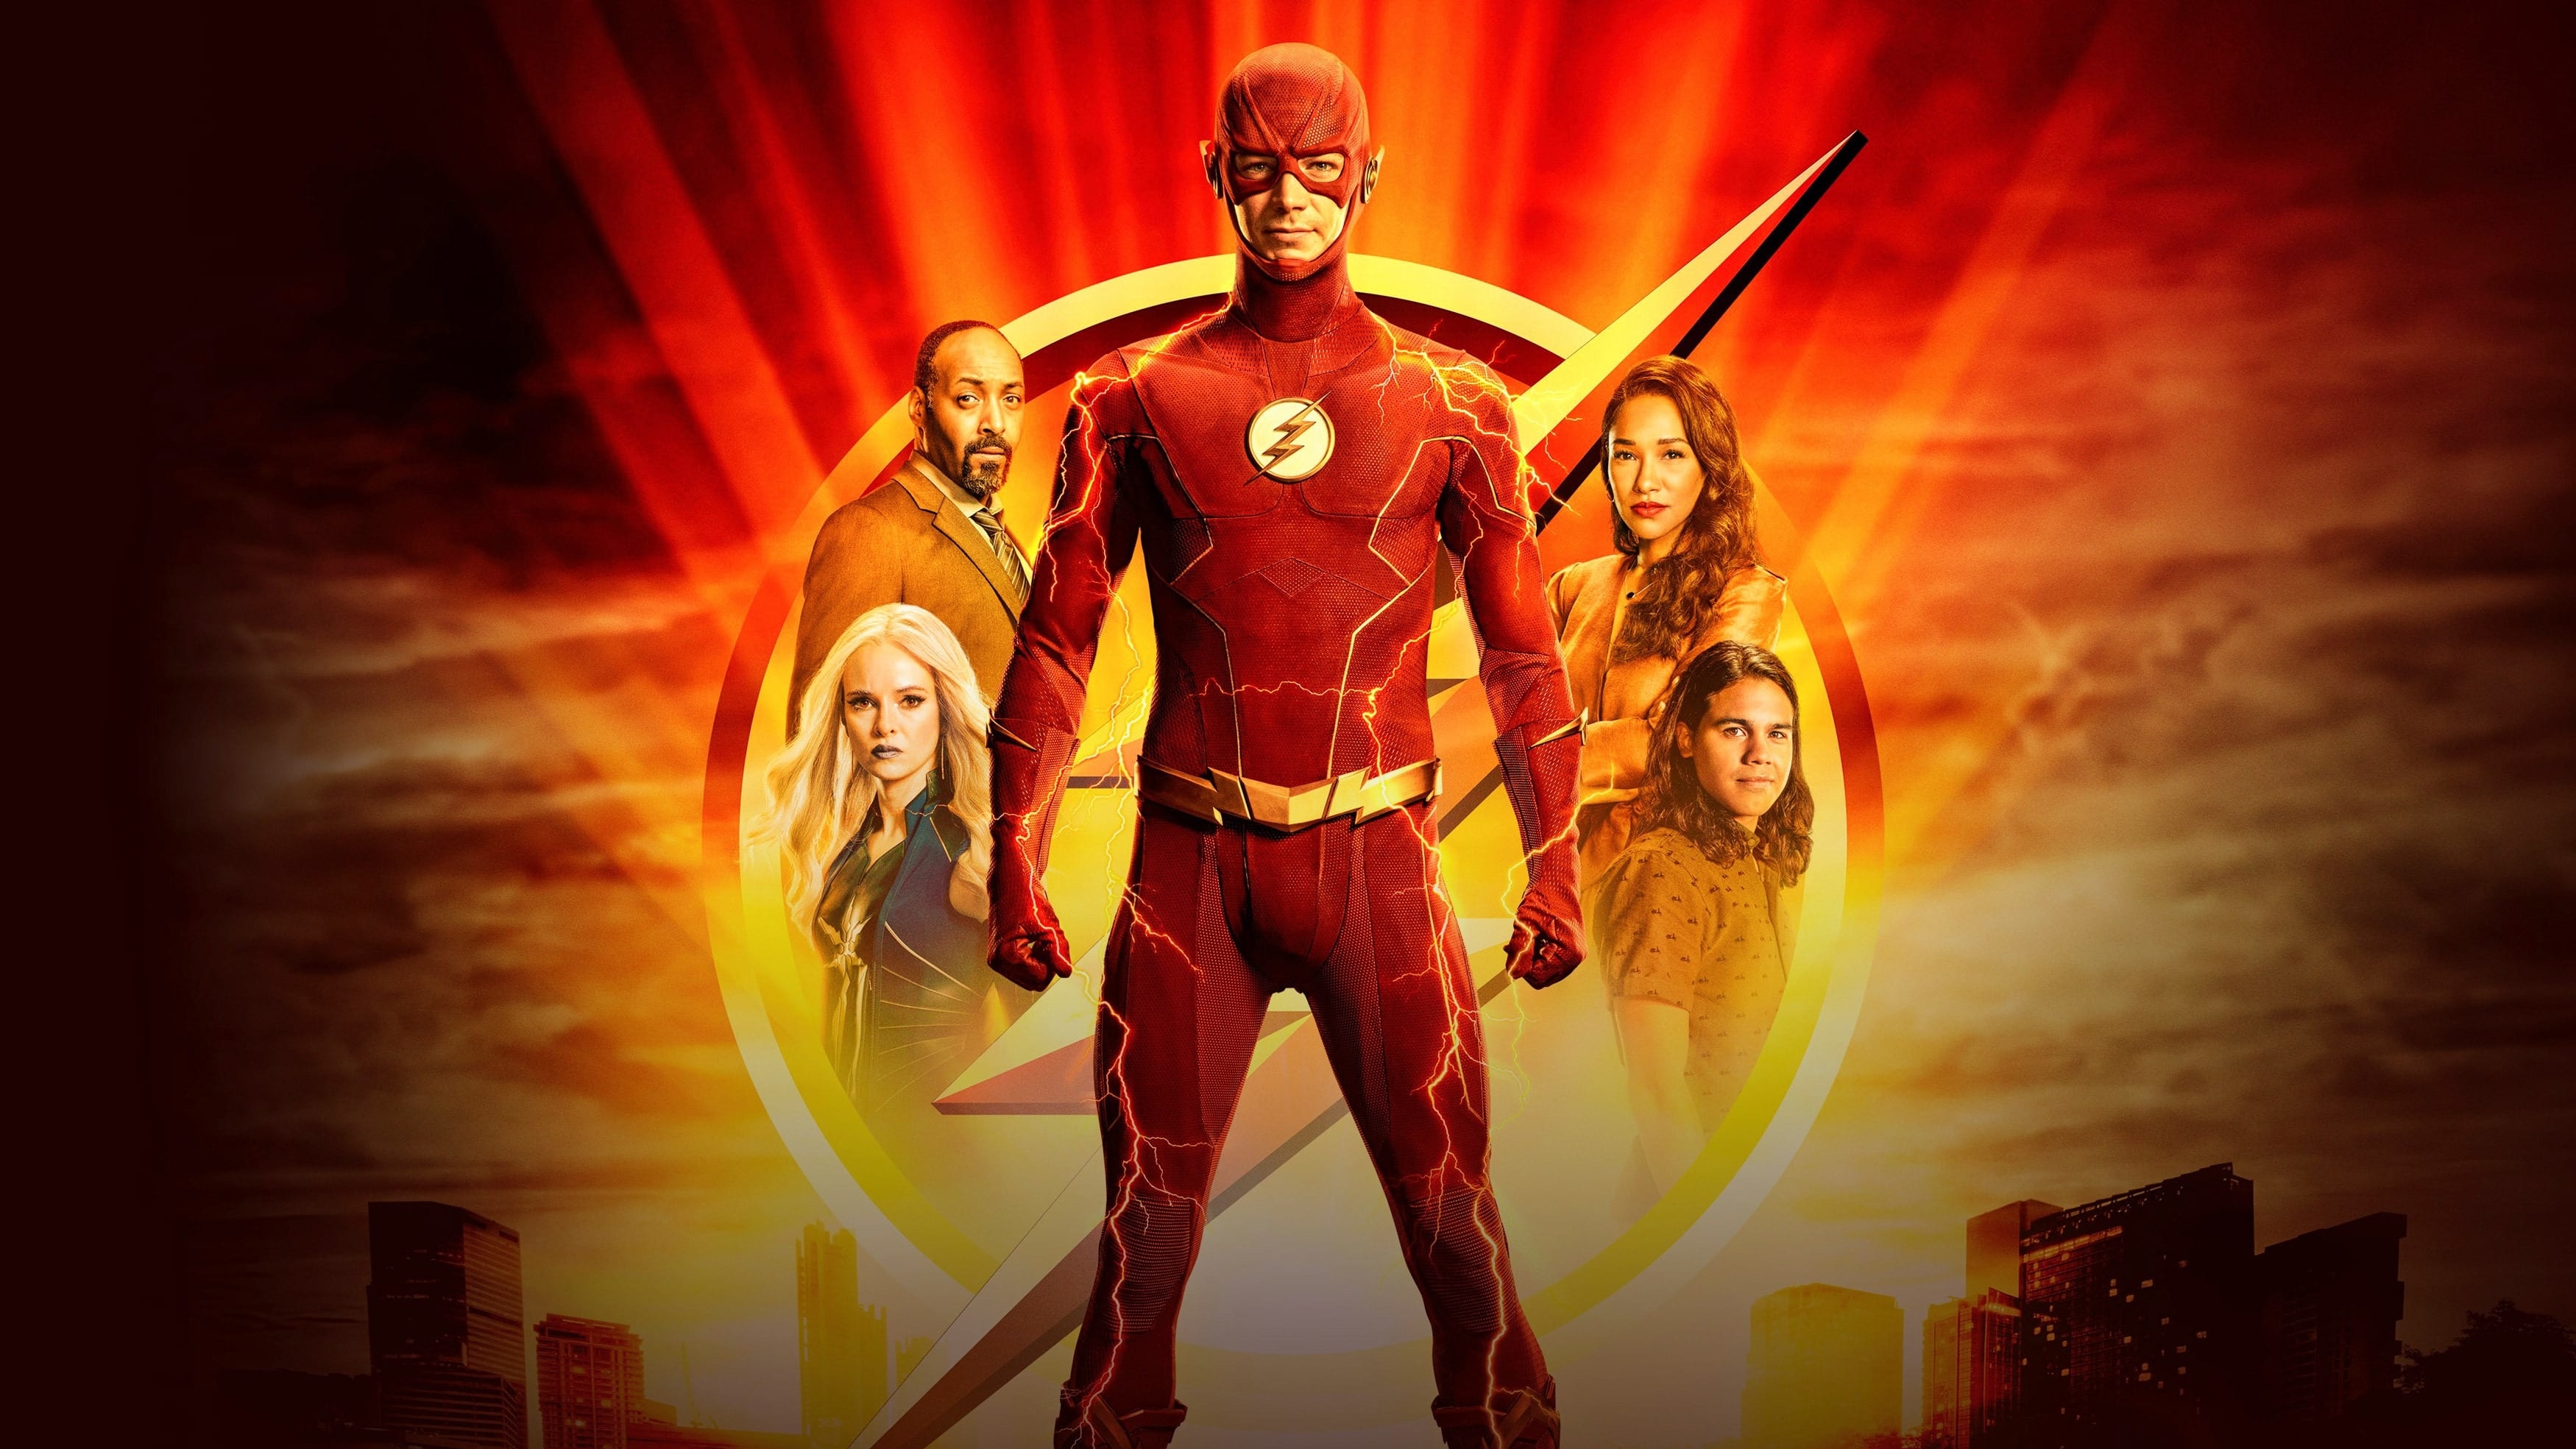 The Flash 2021 Wallpaper, HD TV Series